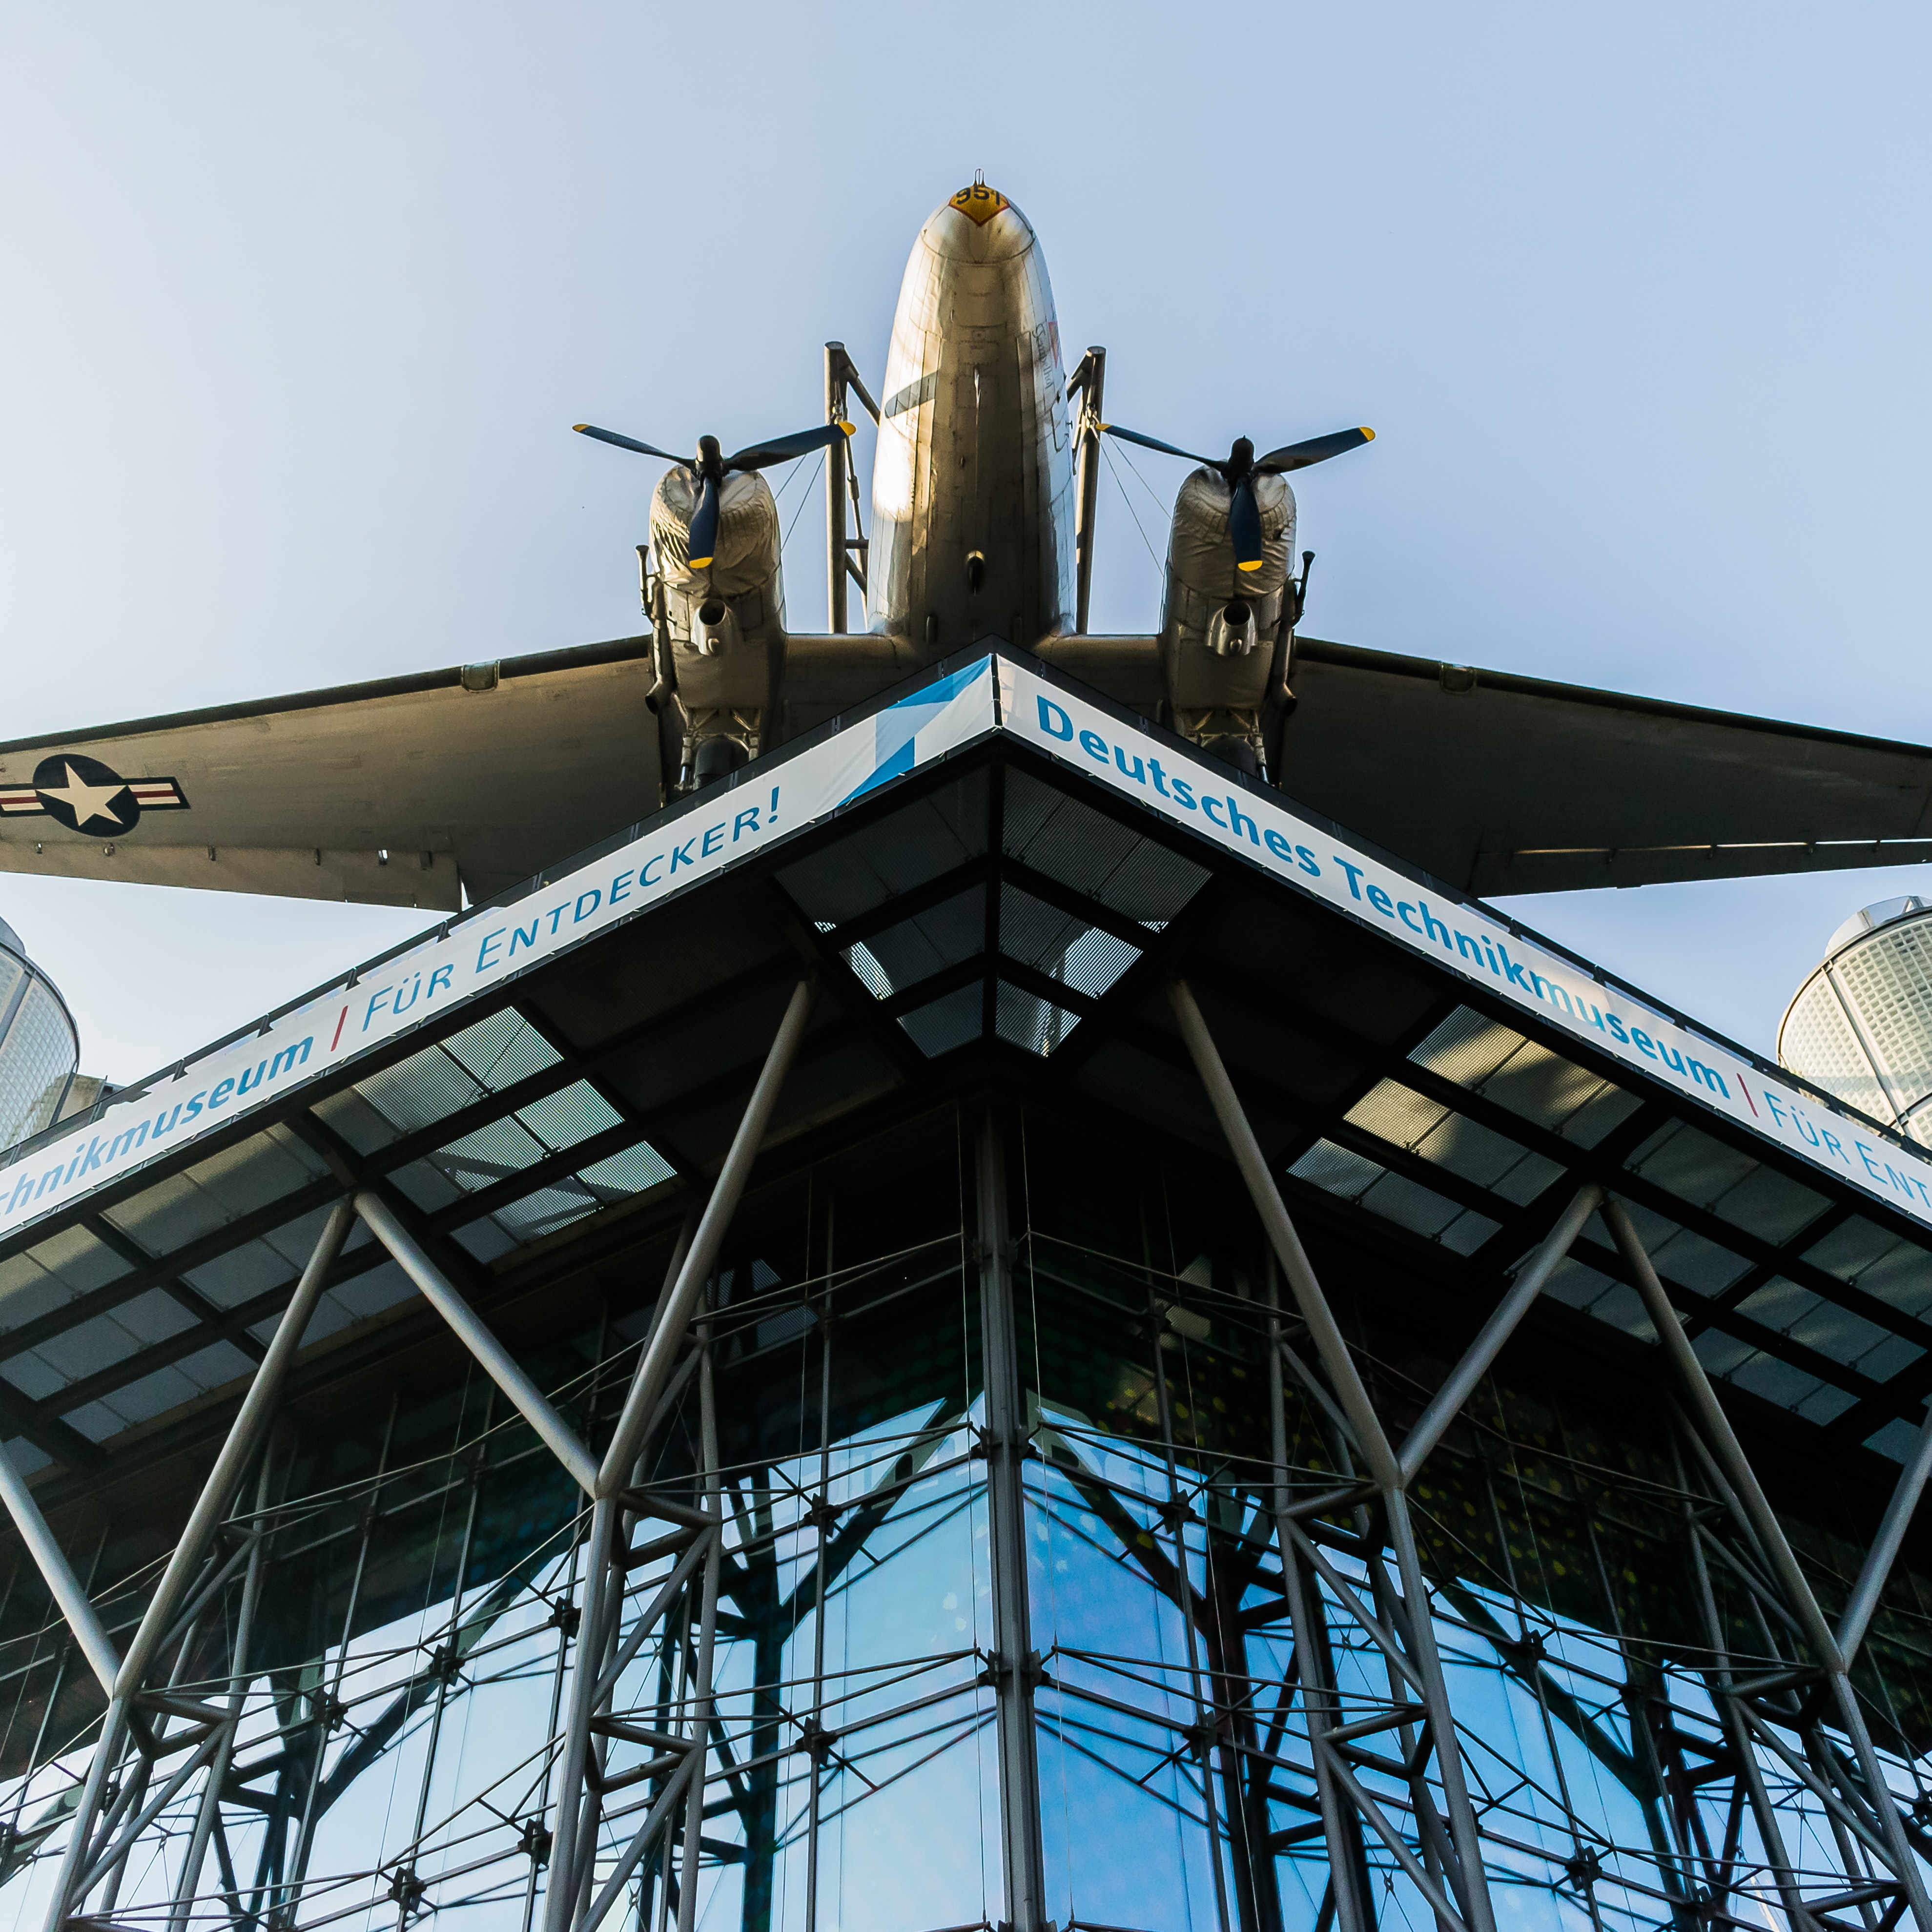 Aircraft at the German Museum of Technology, Berlin, Germany. | Photo by the Pankaj Patel on Unsplash